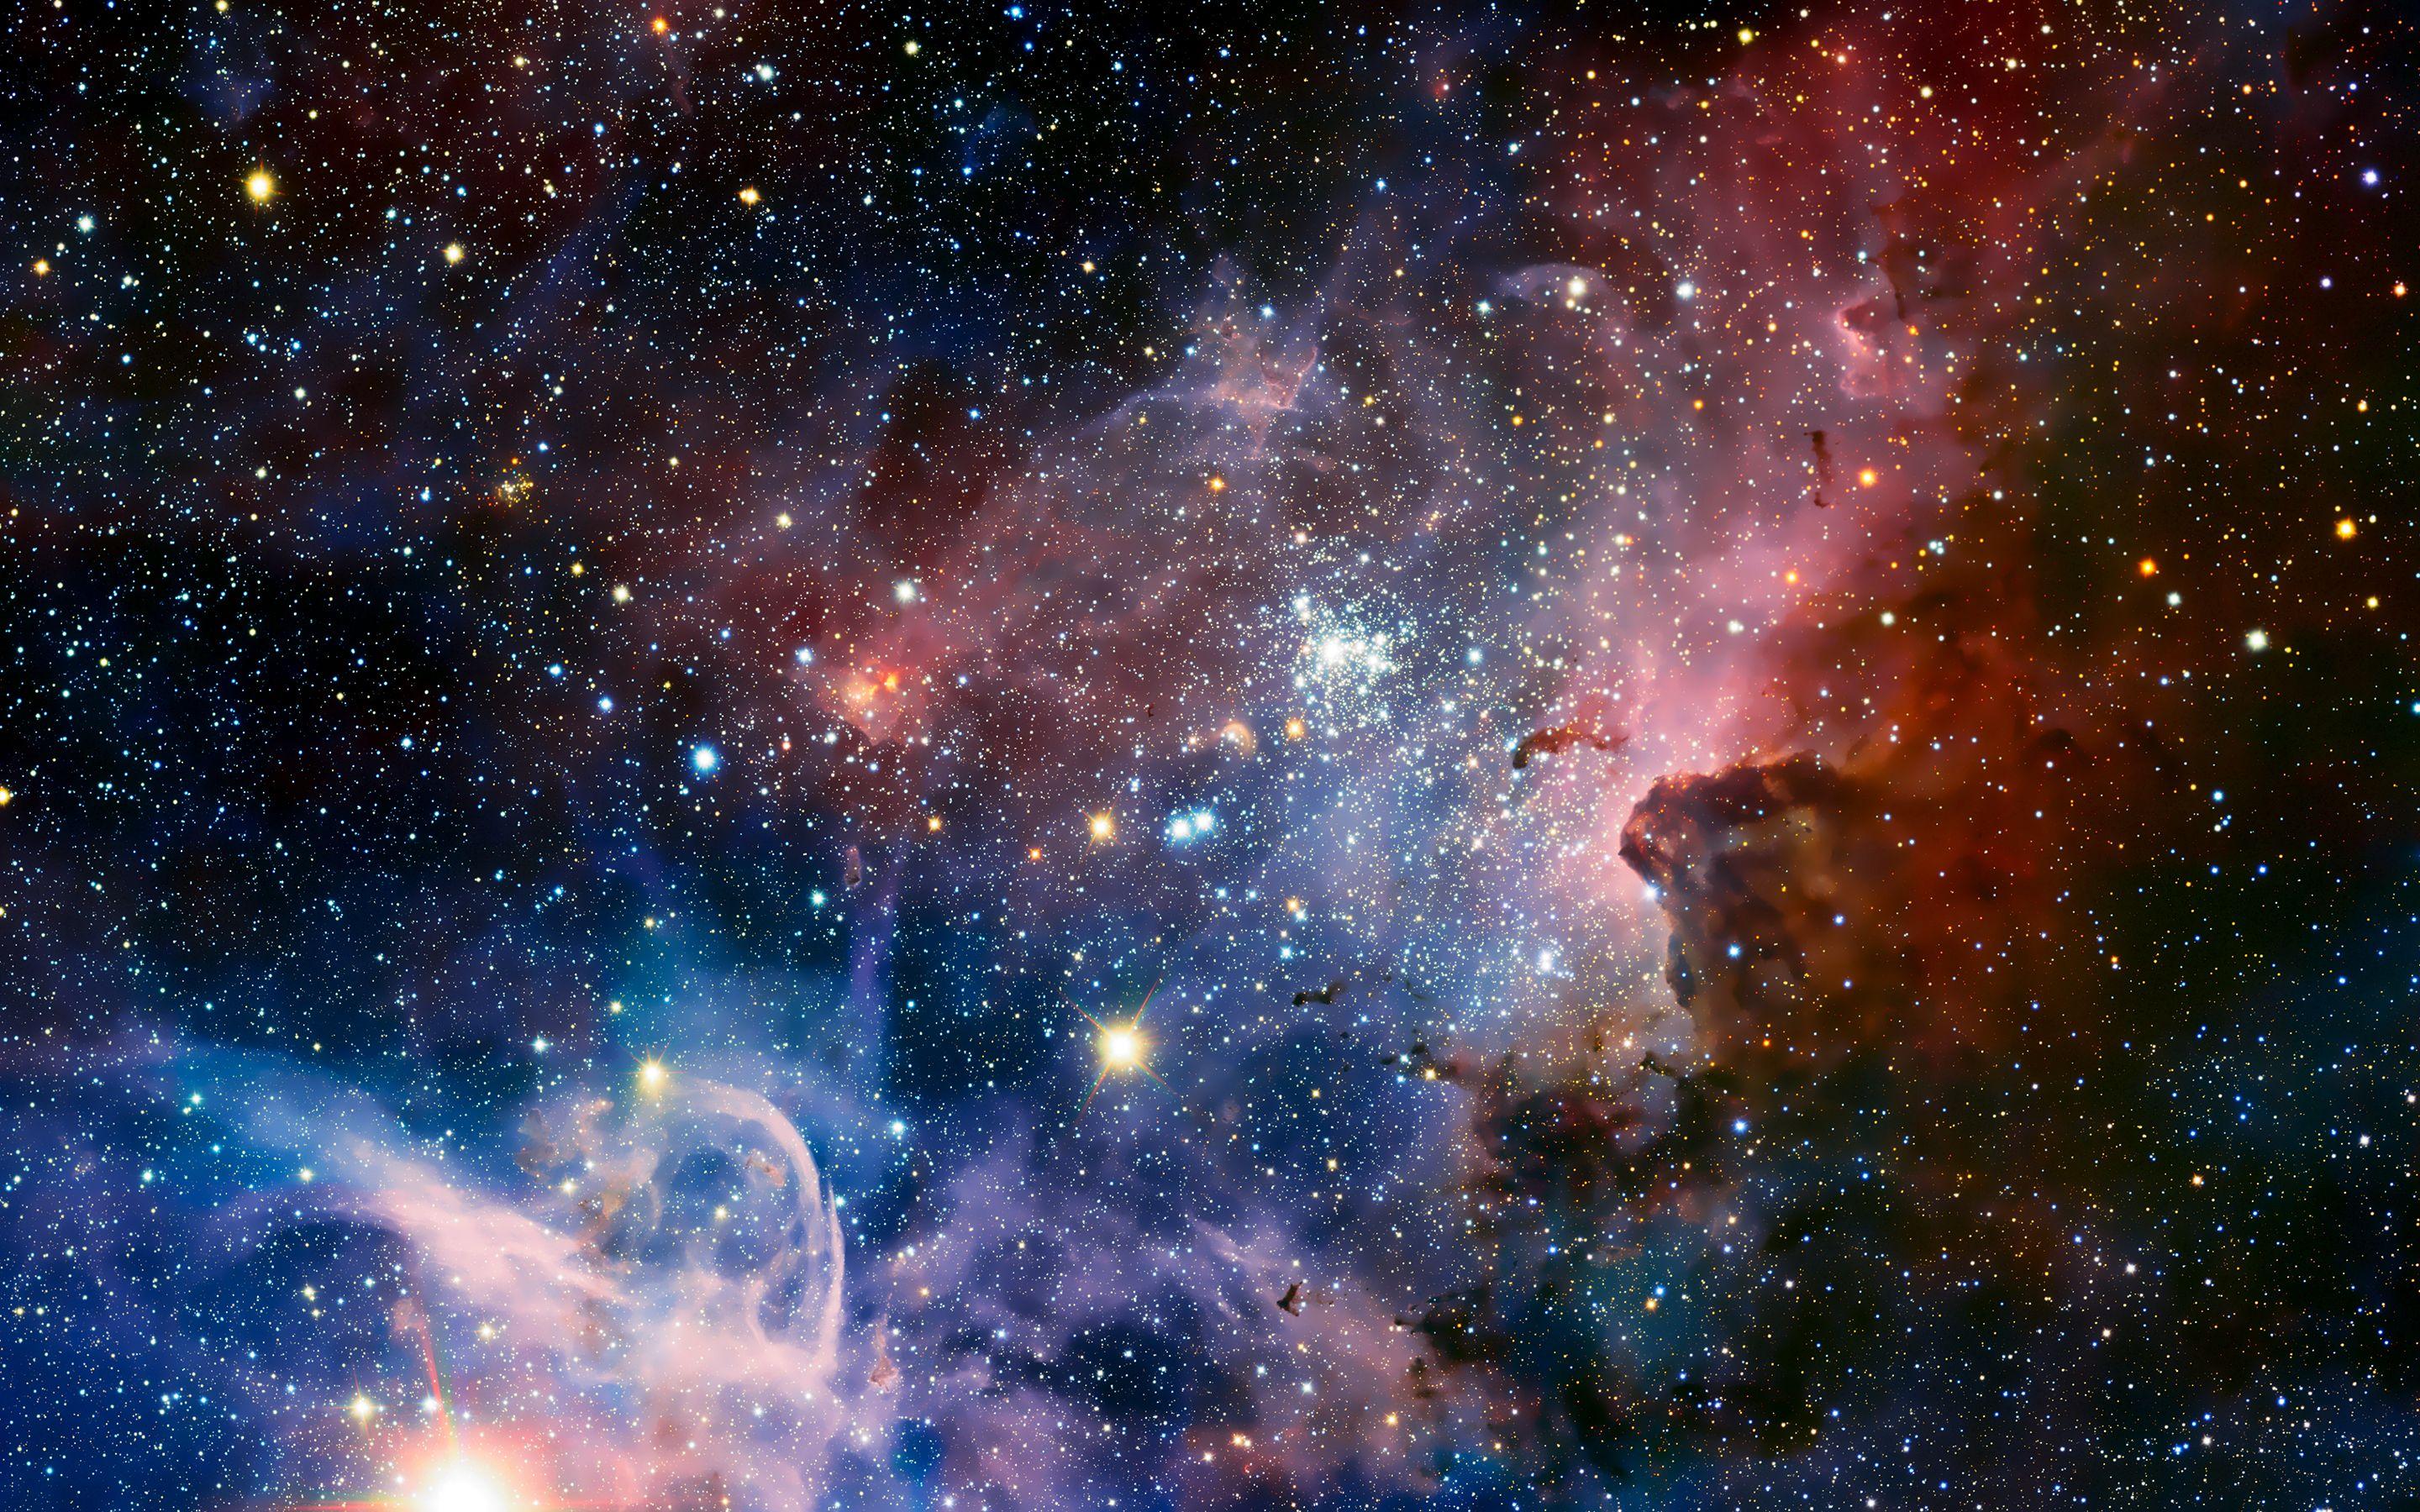 Premium Photo  Hd wallpaper of colorful space stars galaxy nebula 3d  rendering